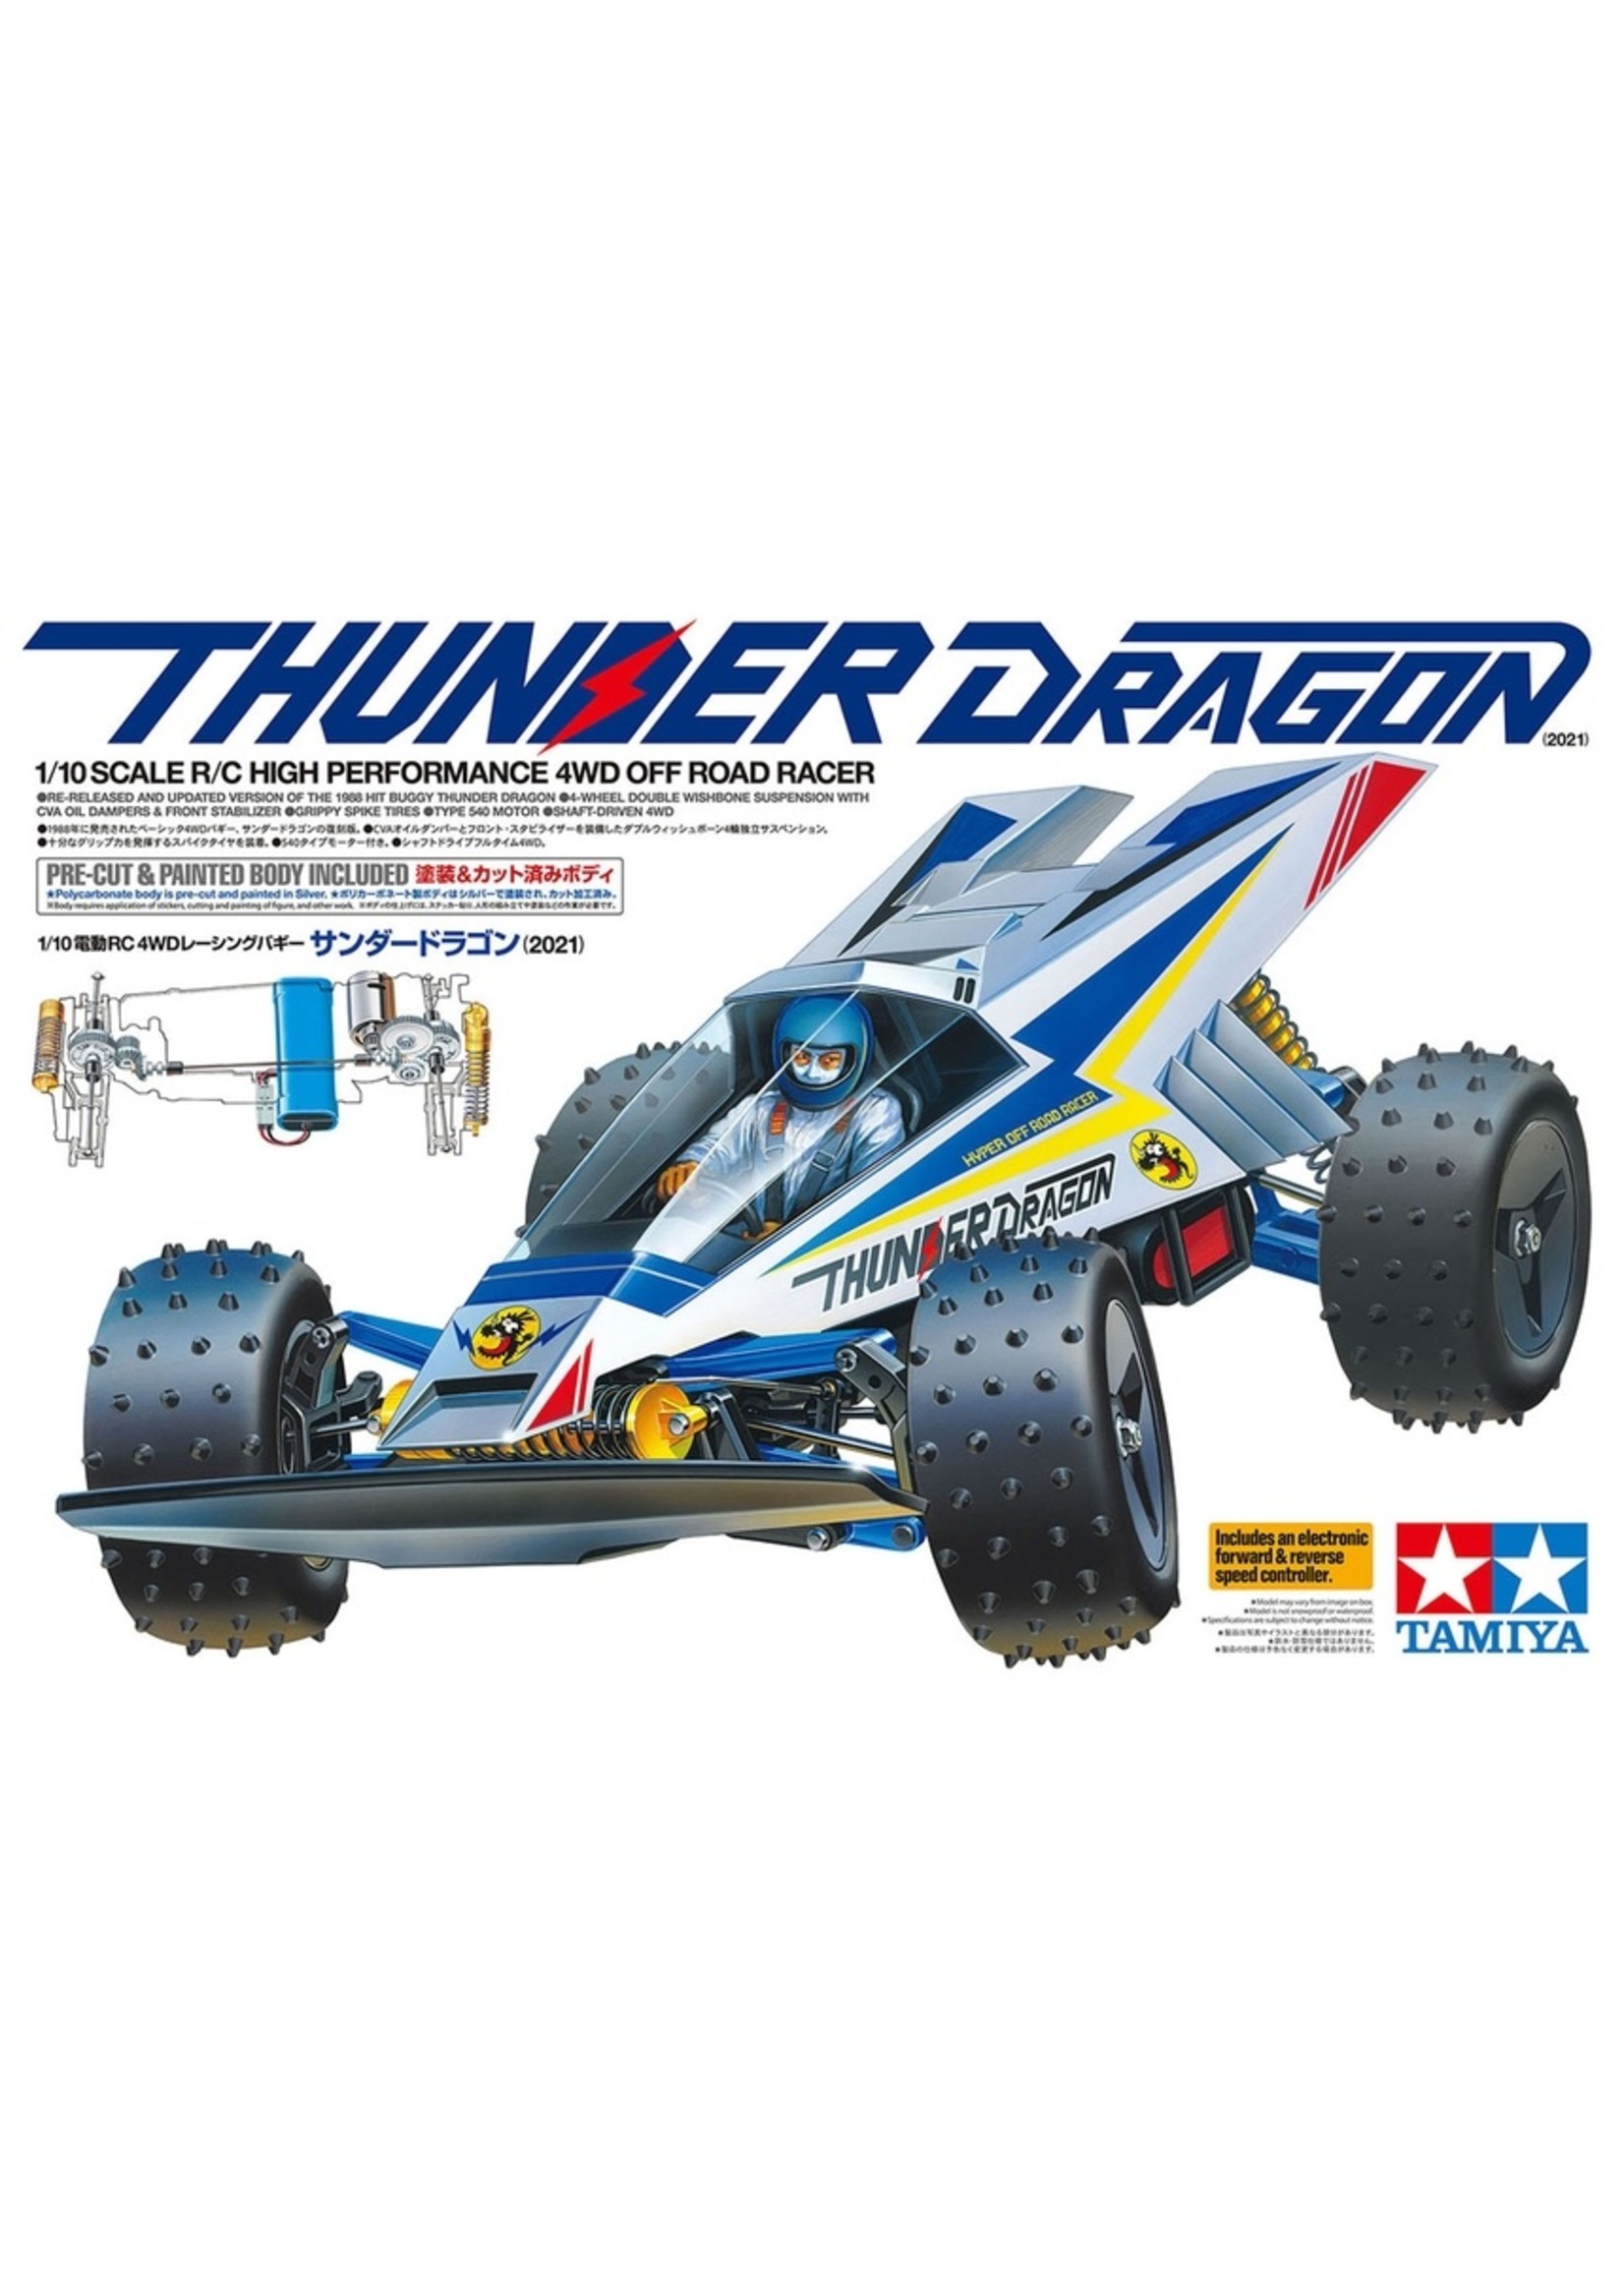 Tamiya 1/10 Thunder Dragon Buggy Kit